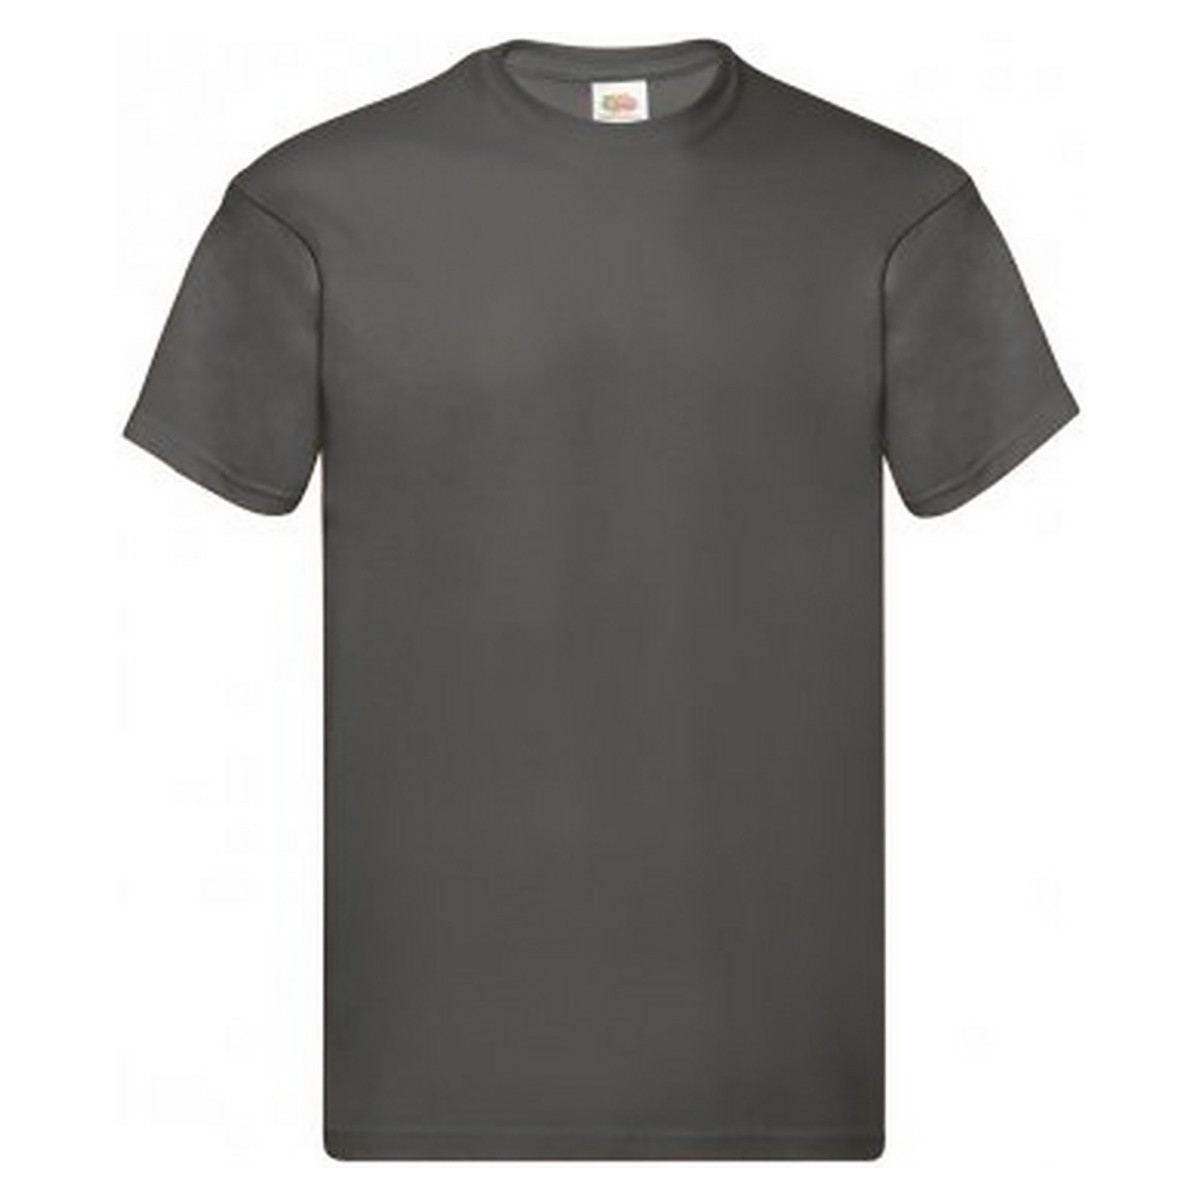 Vêtements Homme T-shirts manches courtes Fruit Of The Loom SS12 Gris